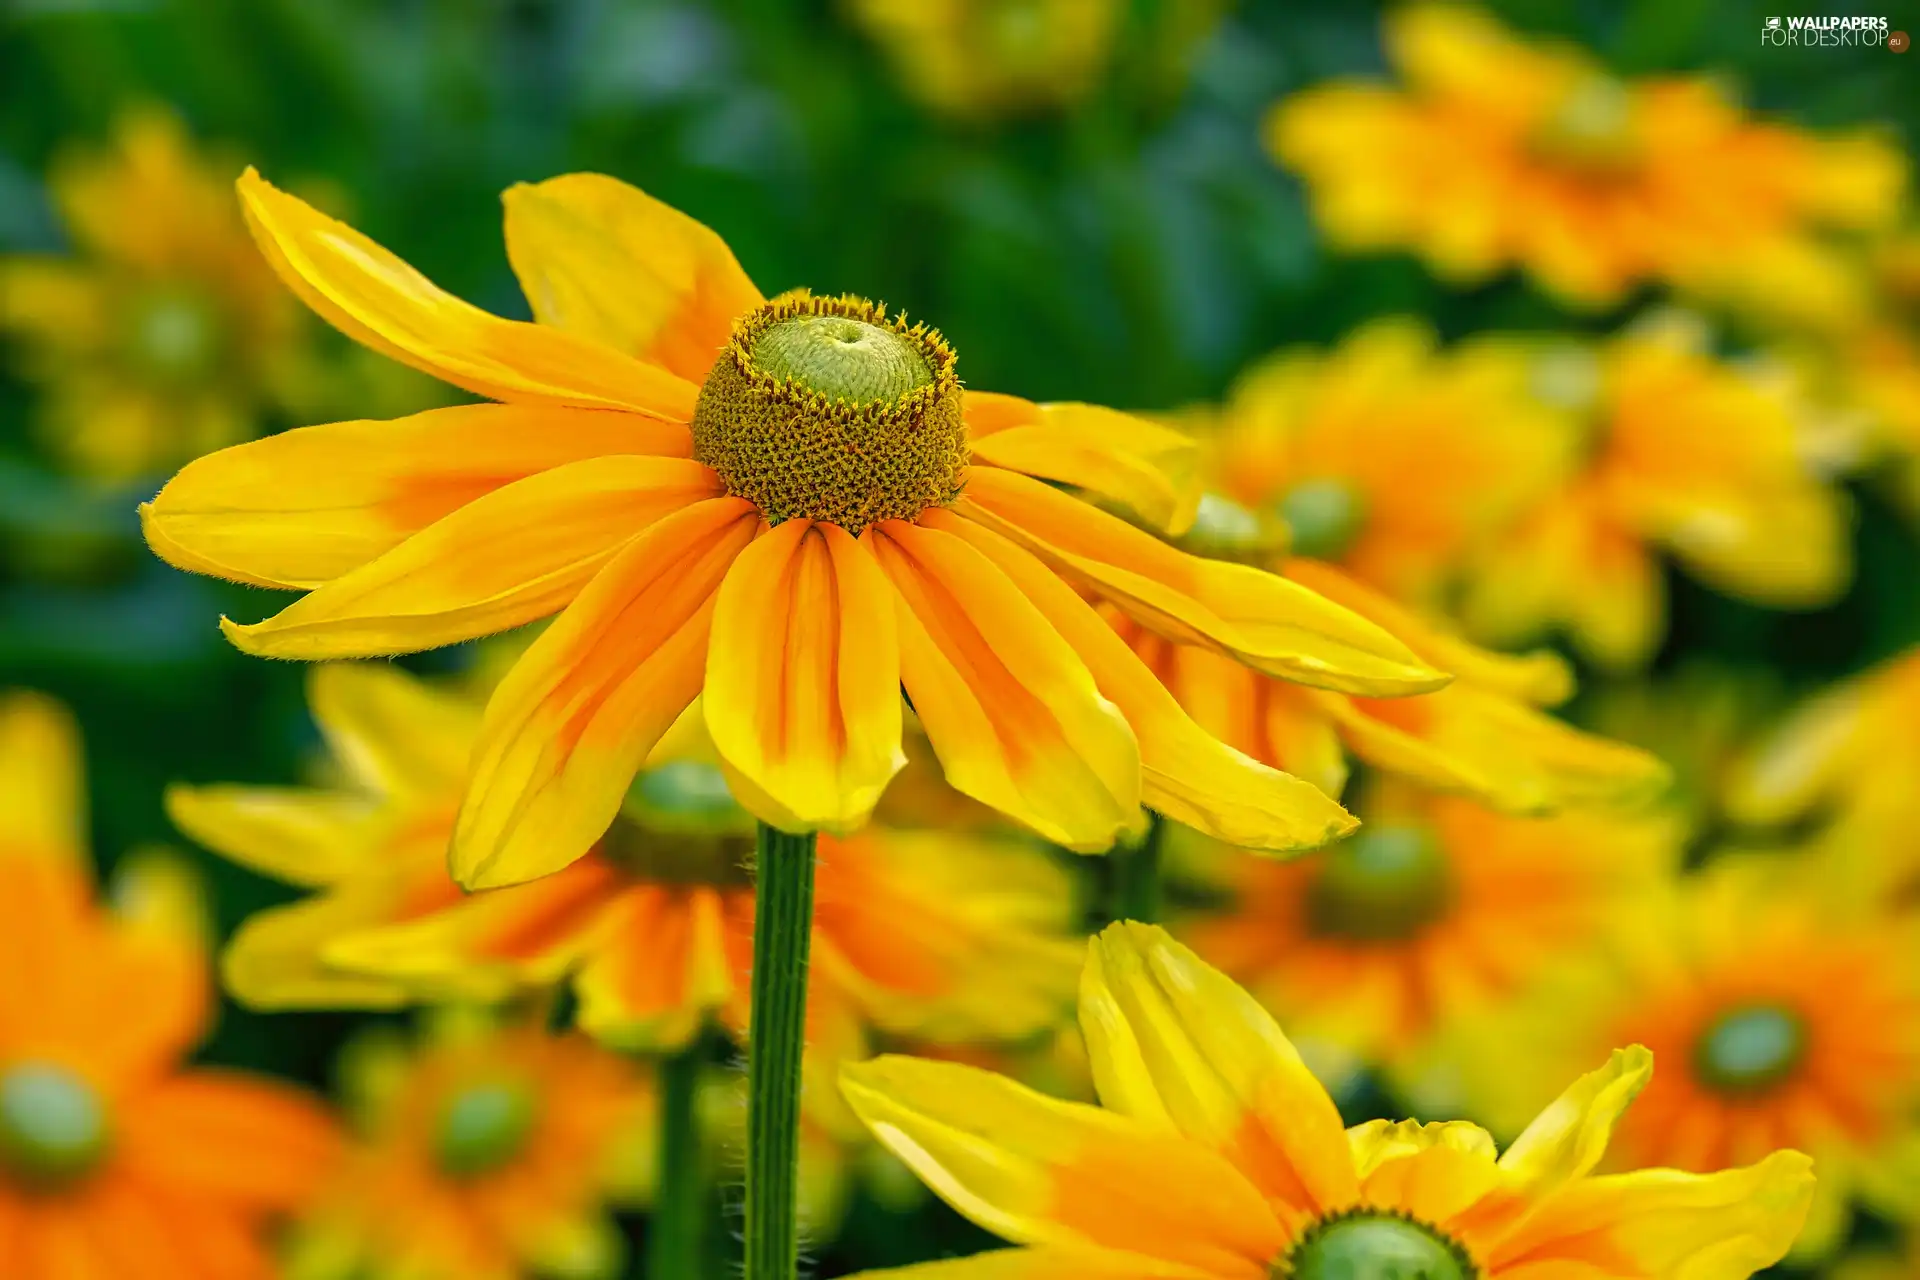 Yellow, Green-headed Coneflower, blurry background, Flowers